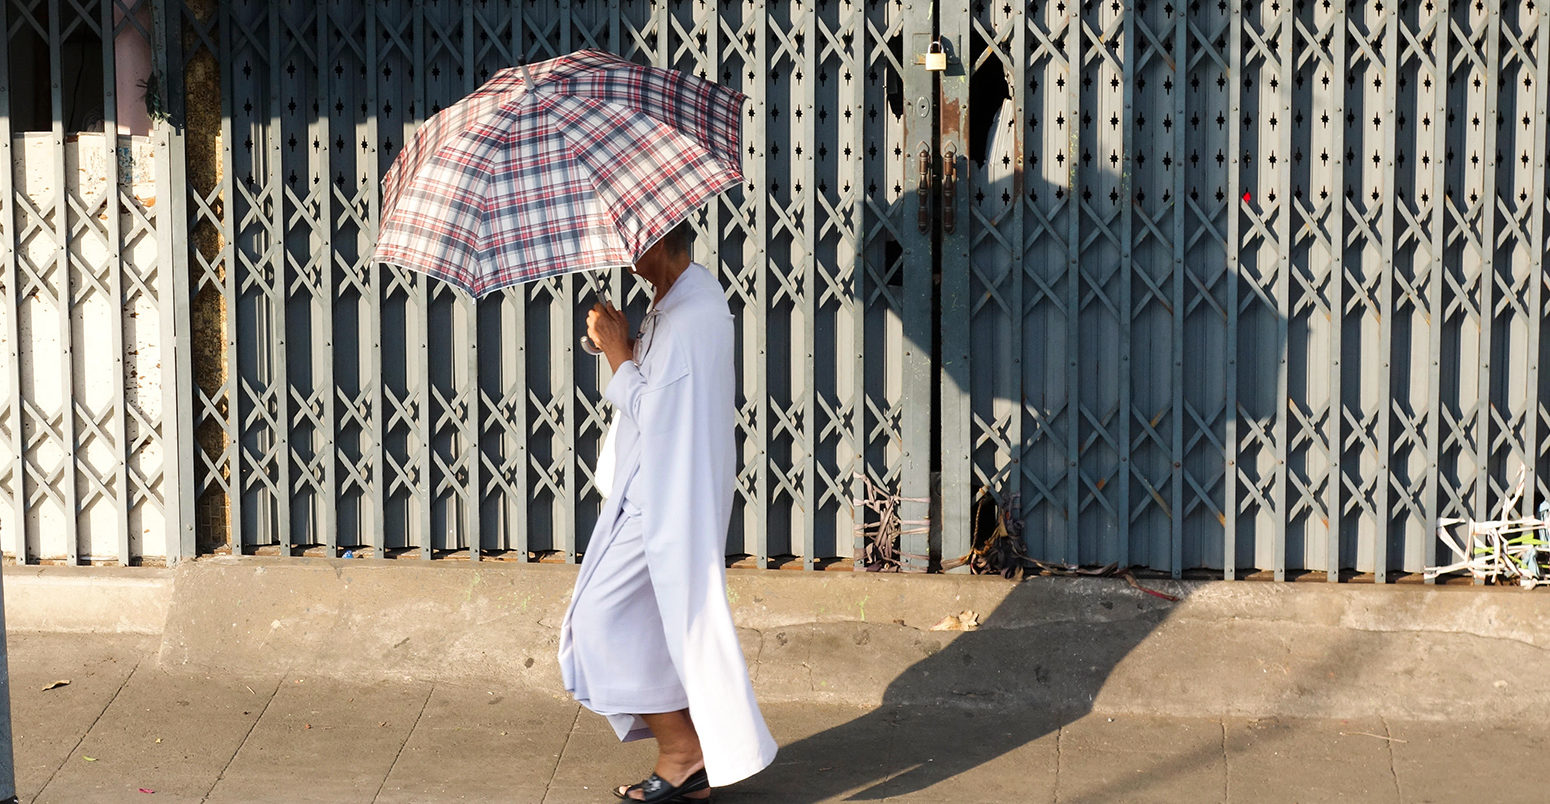 EE03A2 Buddhist Man with umbrella against sun walking in street, Bangkok, Thailand, Southeast Asia.